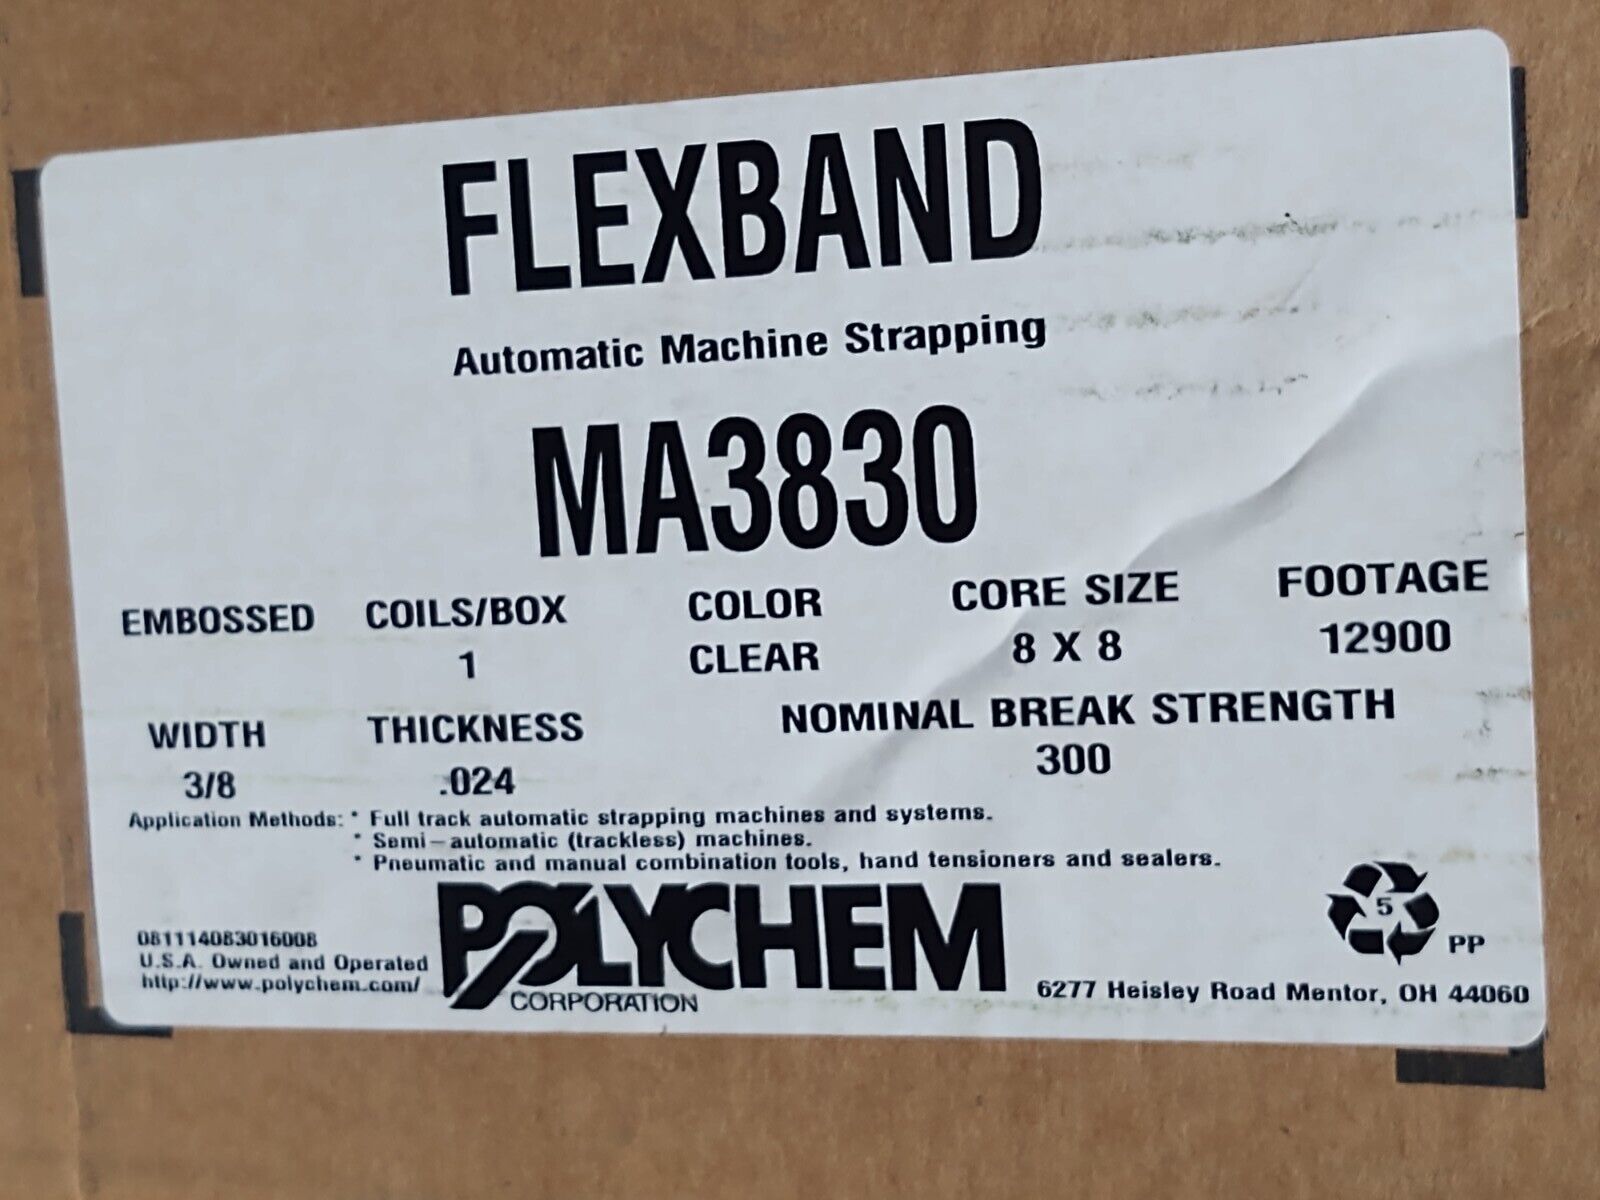 New roll Polychem clear automatic machine strapping (Flexband MA3830) 3/8"x12900